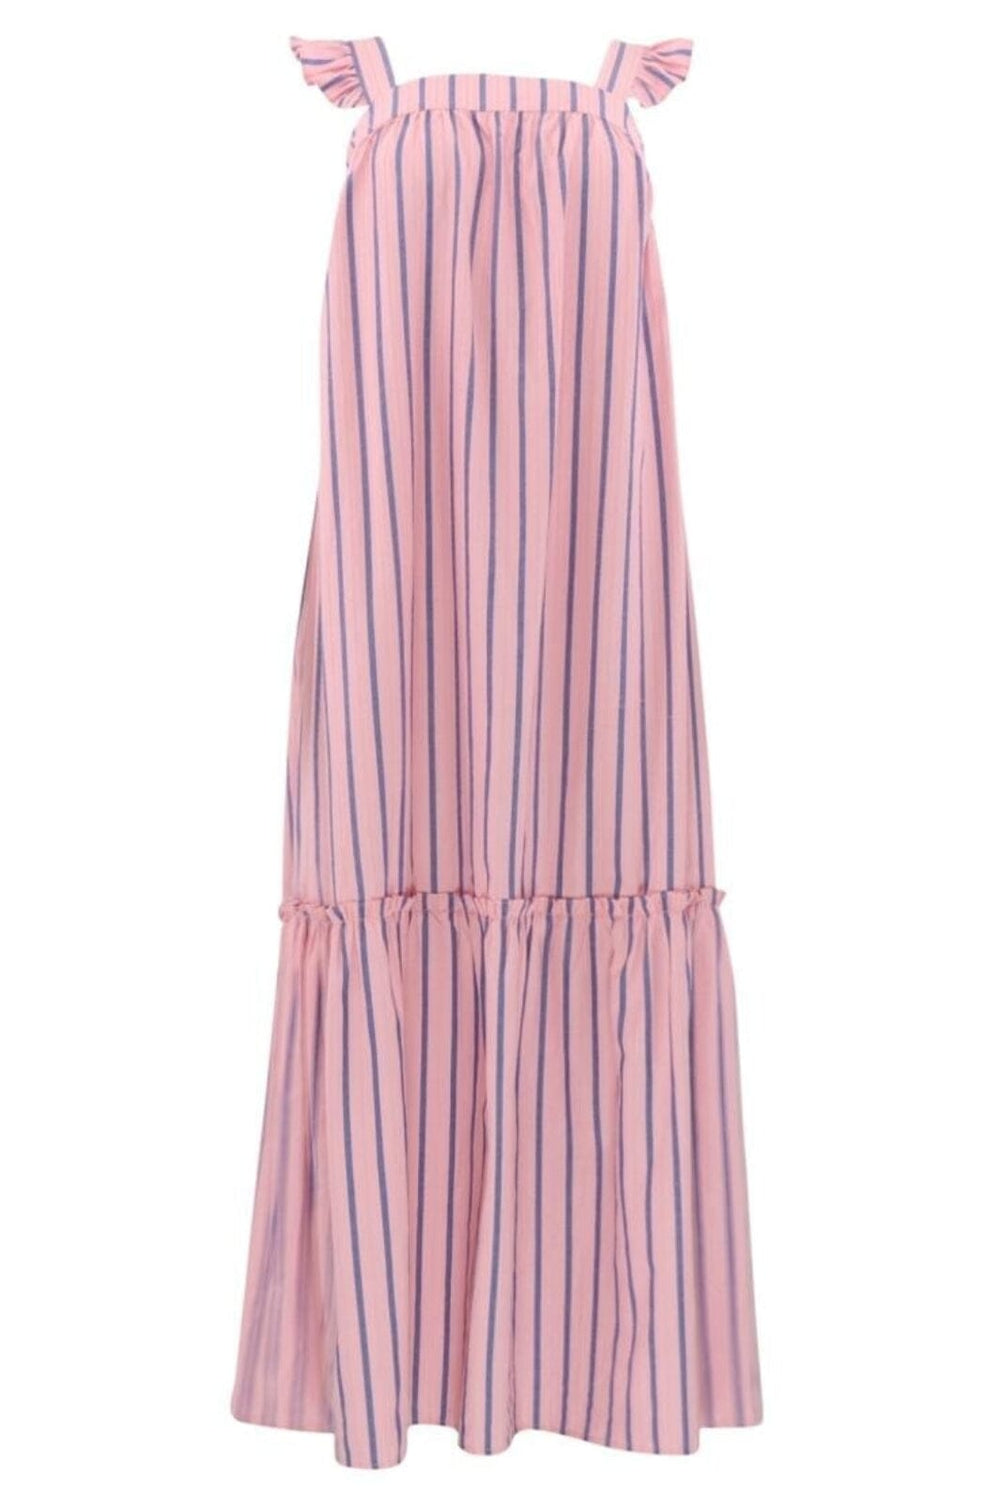 Continue - Lulu Stripe Dress - 001 Stribe Pink Kjoler 